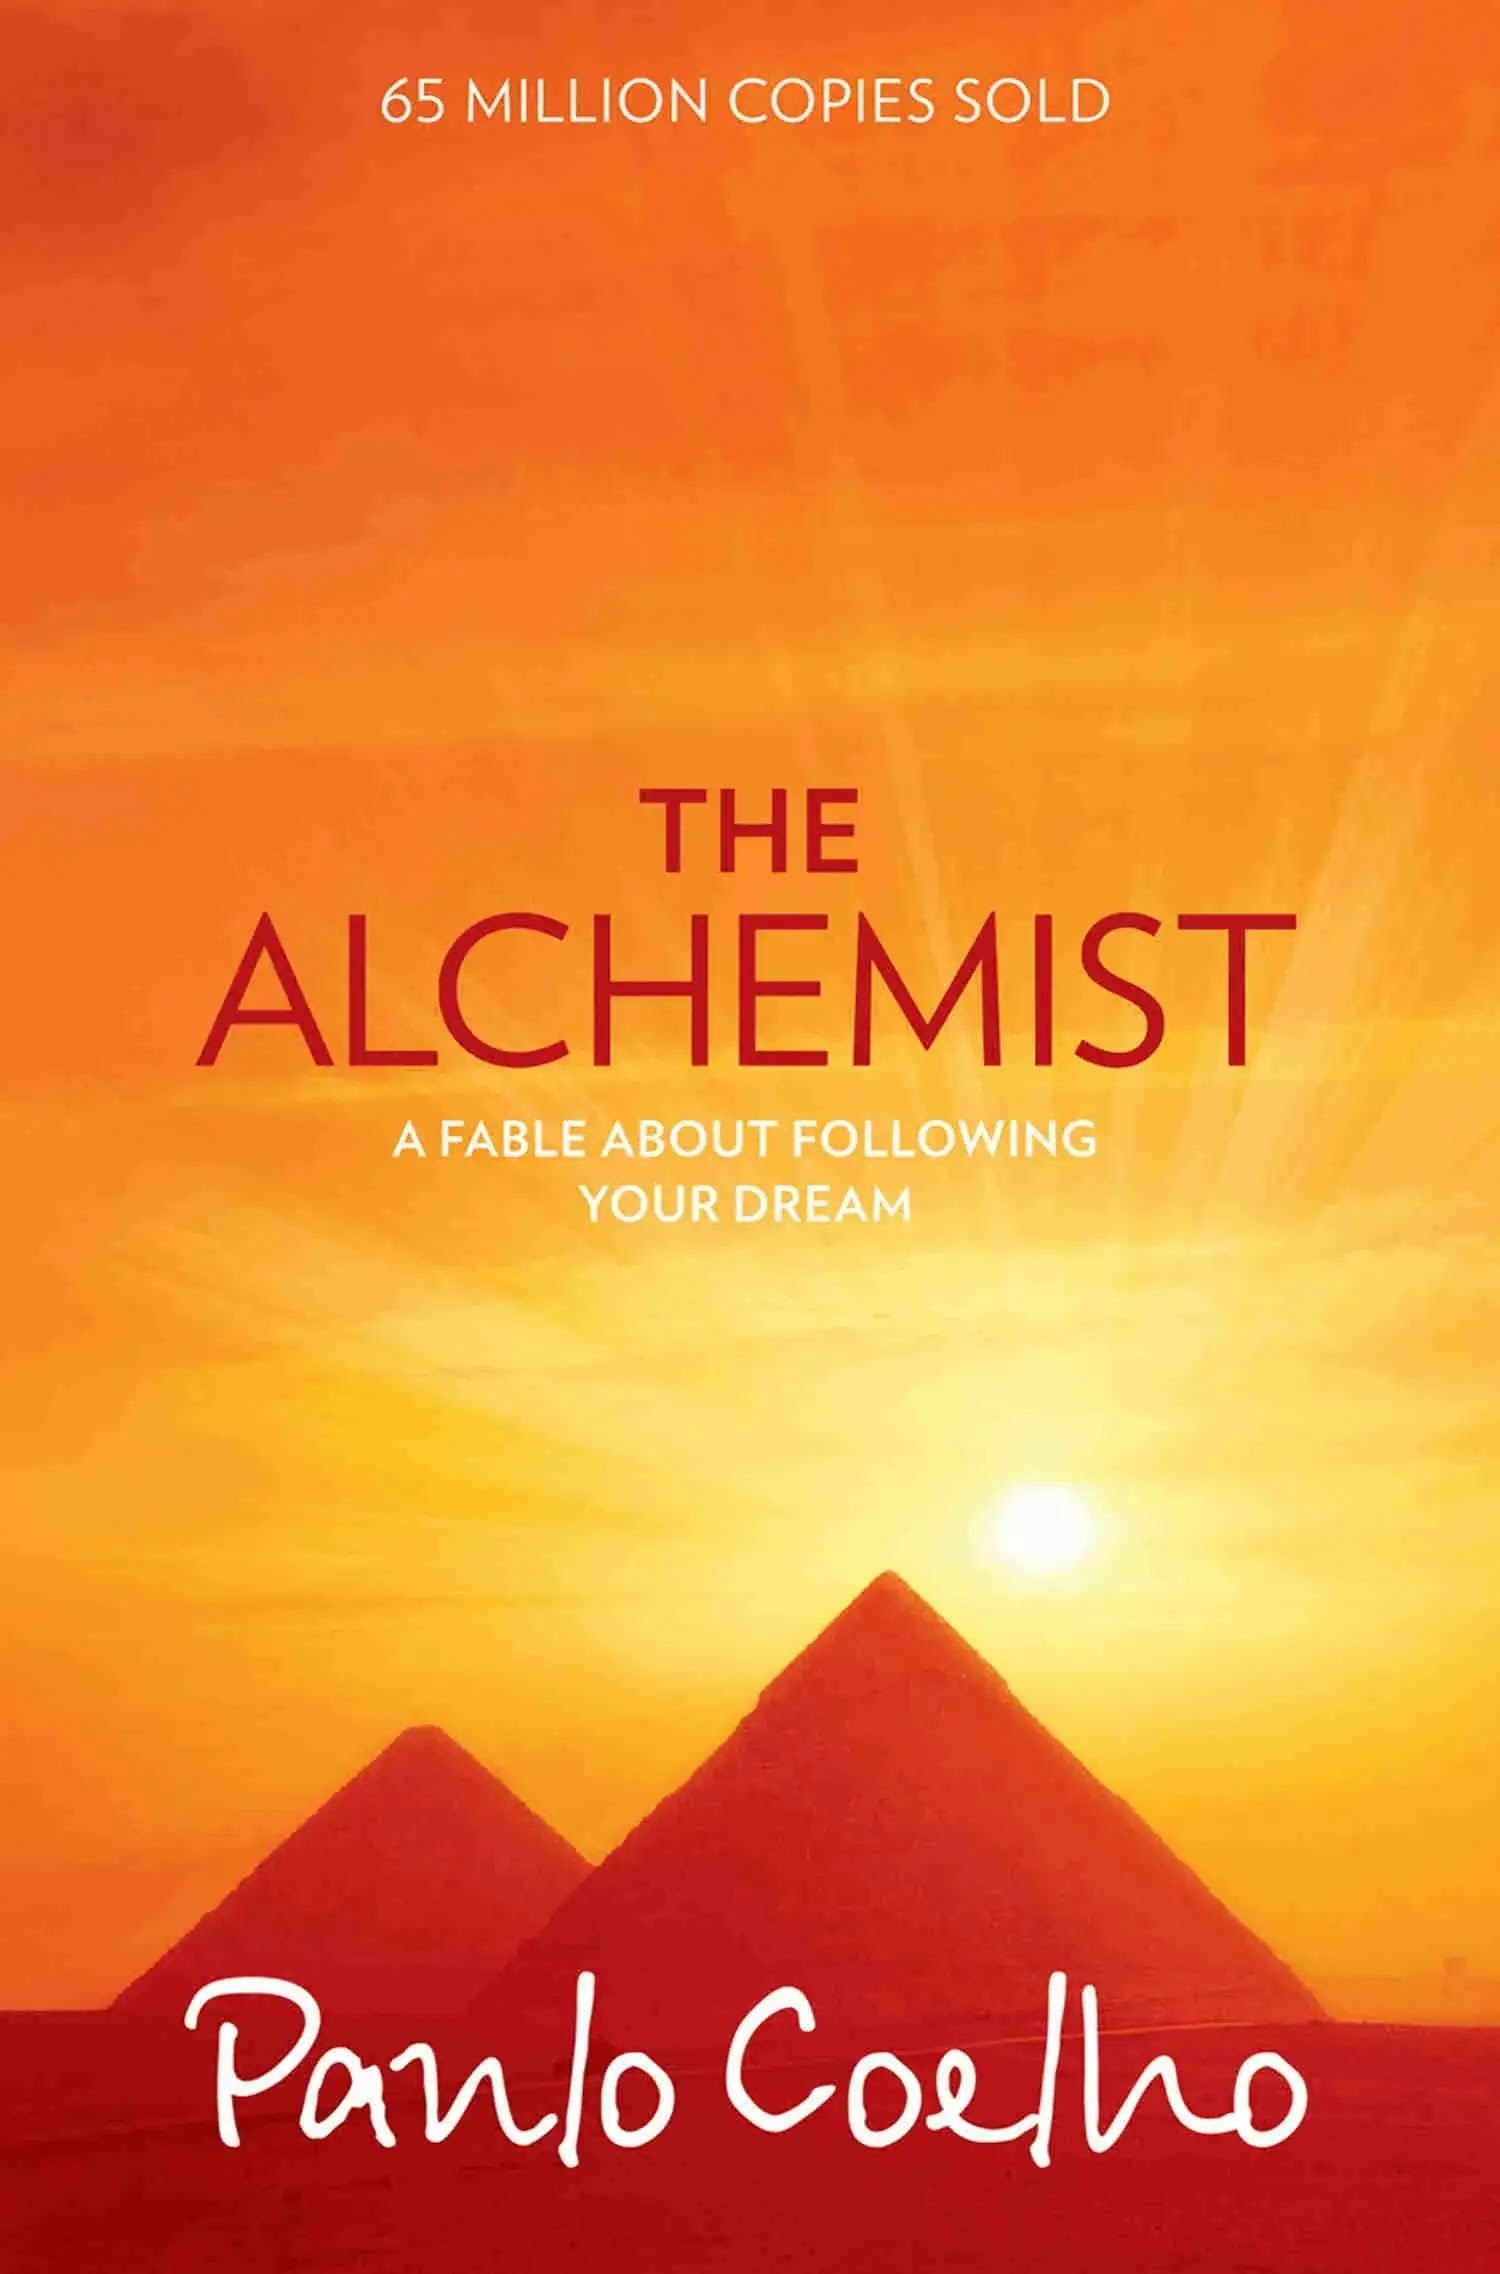 It began with THE ALCHEMIST by Paulo Coelho